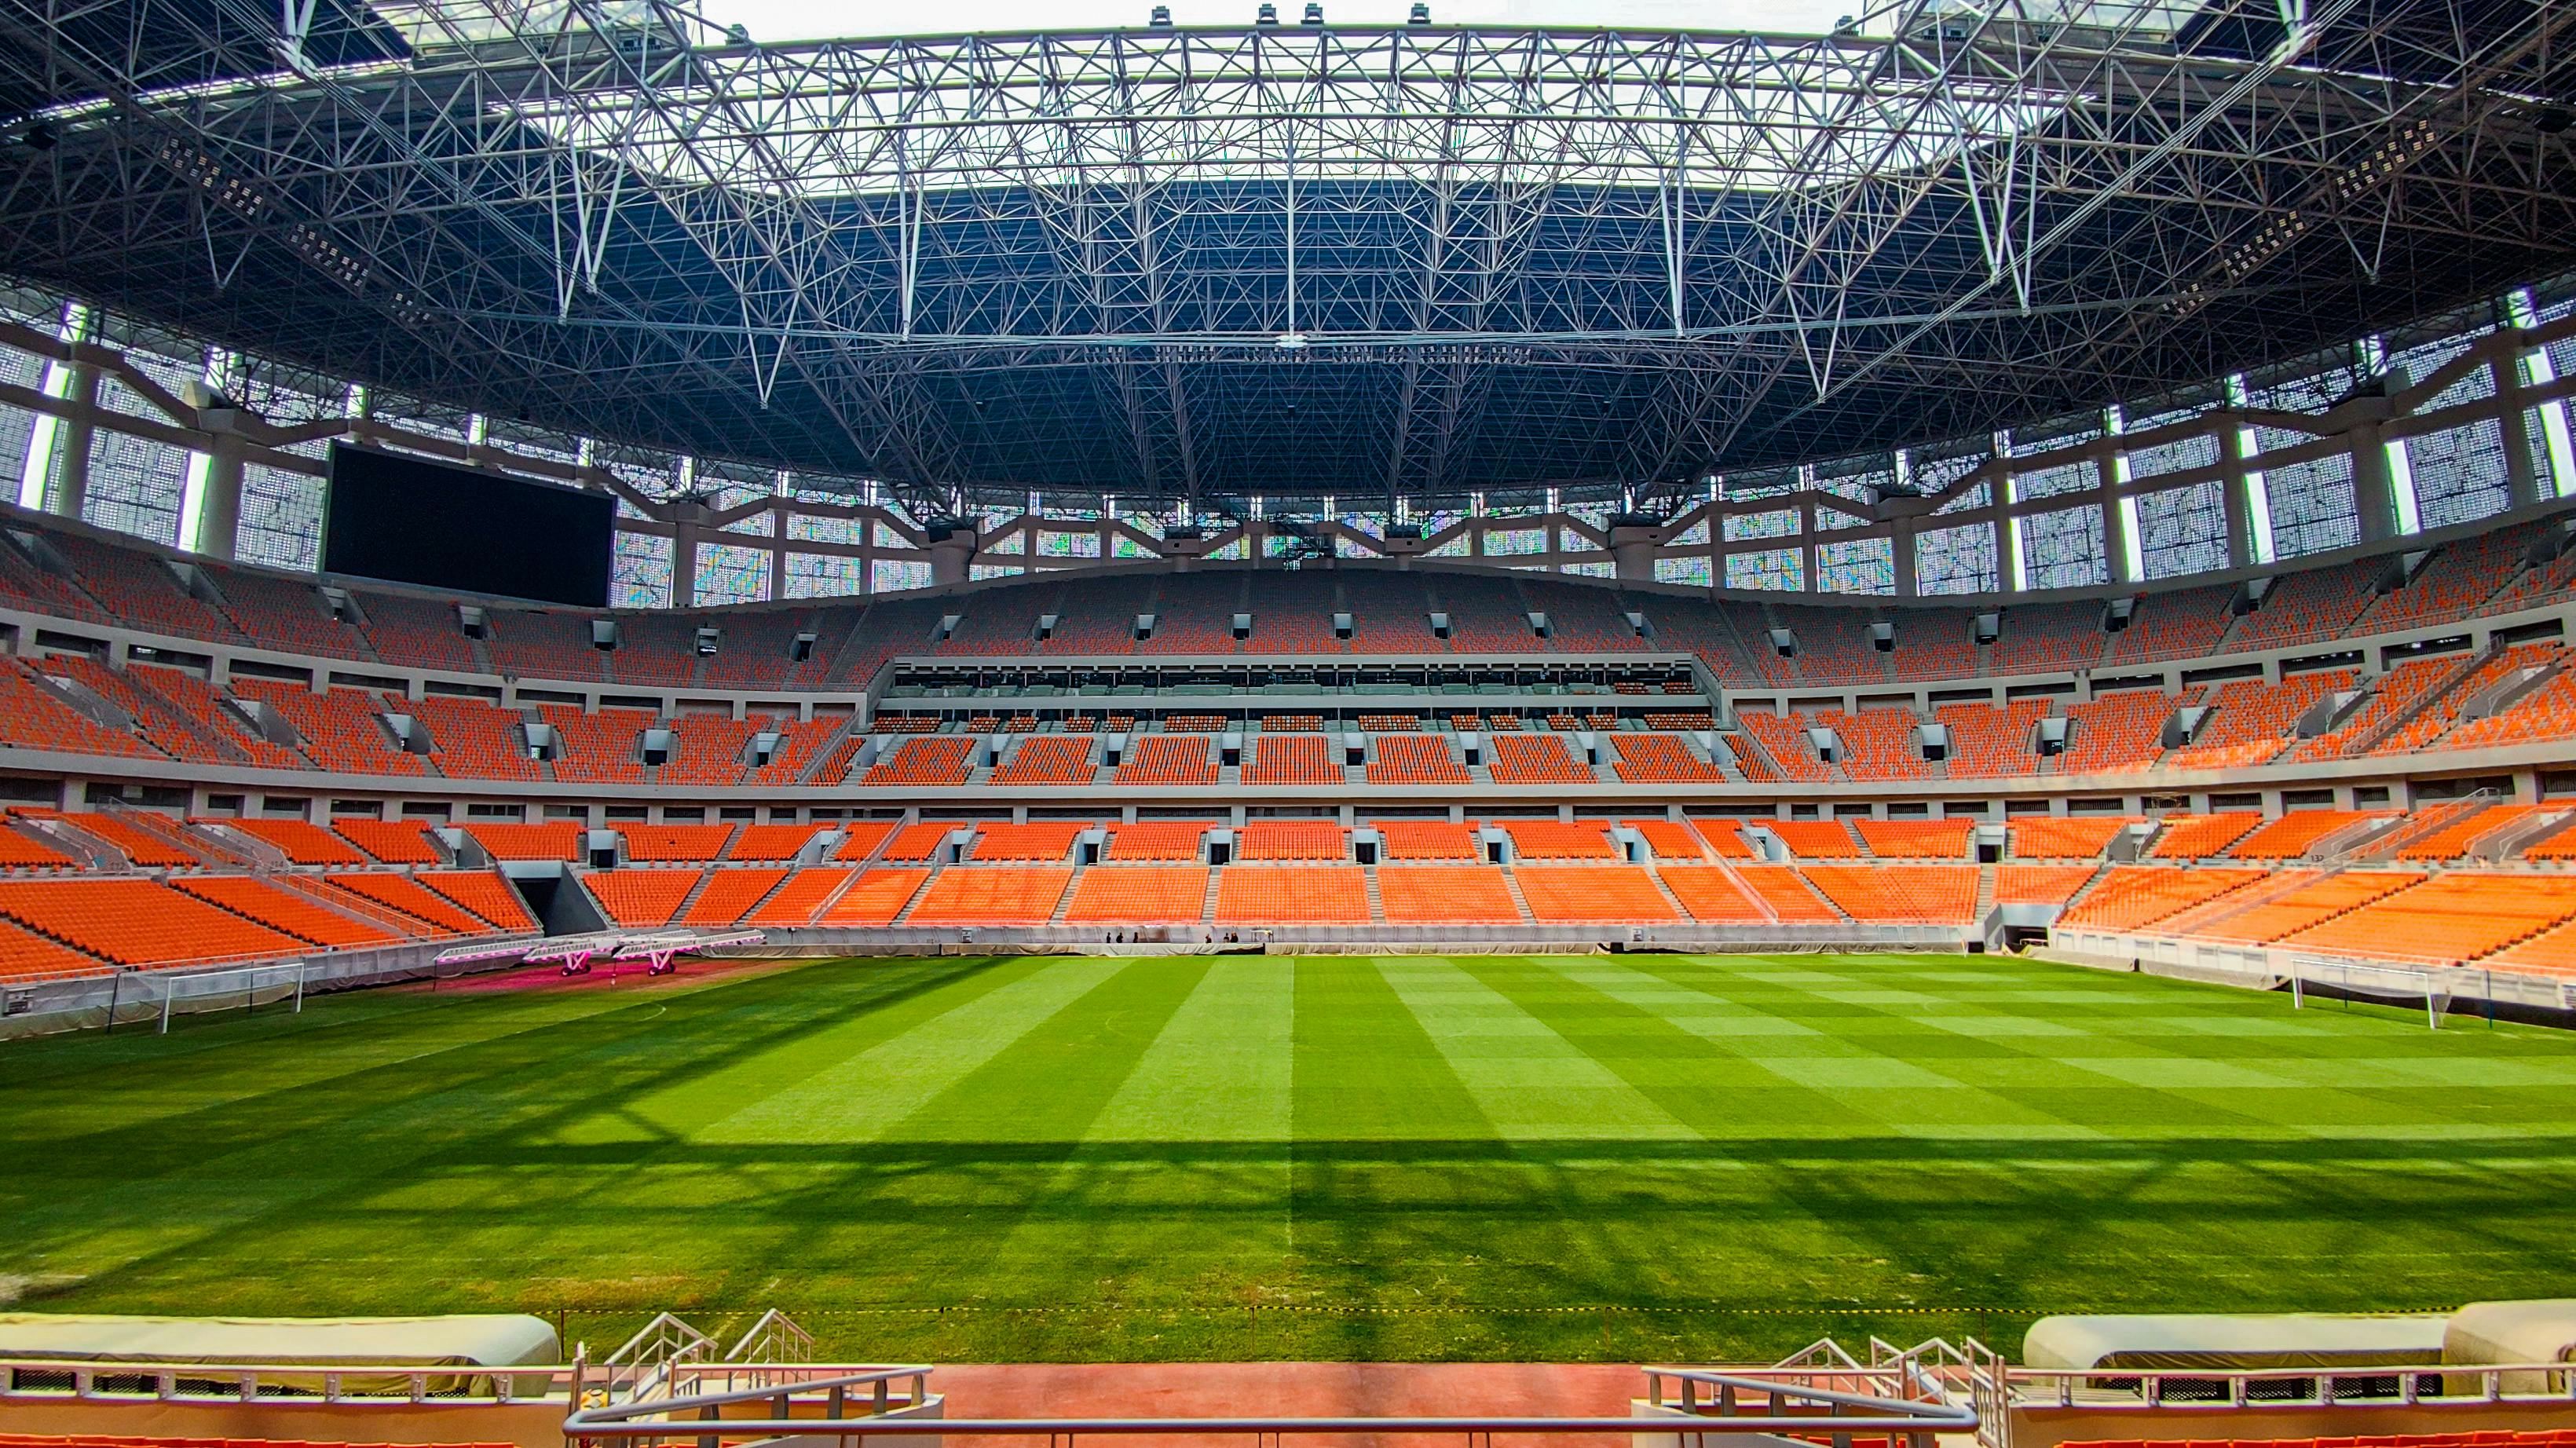 Jakarta International Stadium Photos, Download The BEST Free